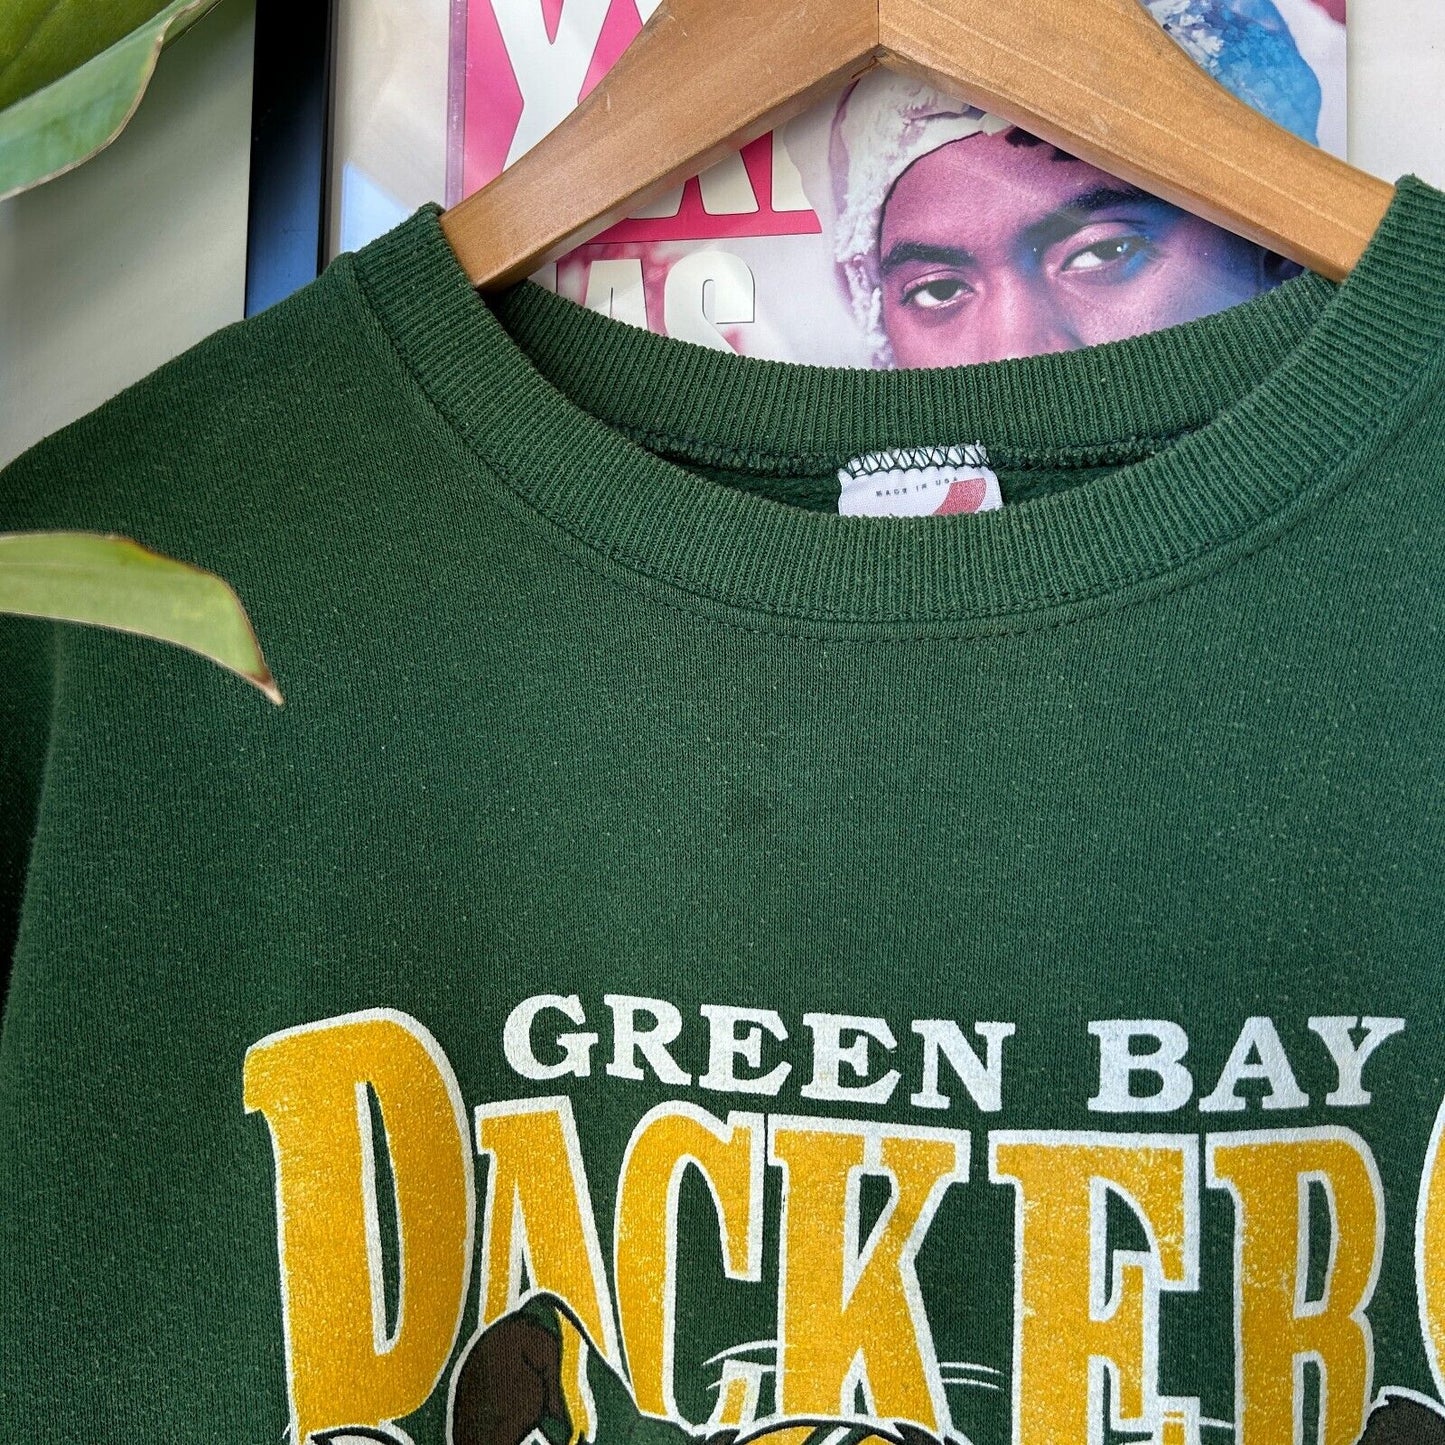 VINTAGE 90s | Green Bay Packers TAZ Football Cartoon Sweater sz L Adult